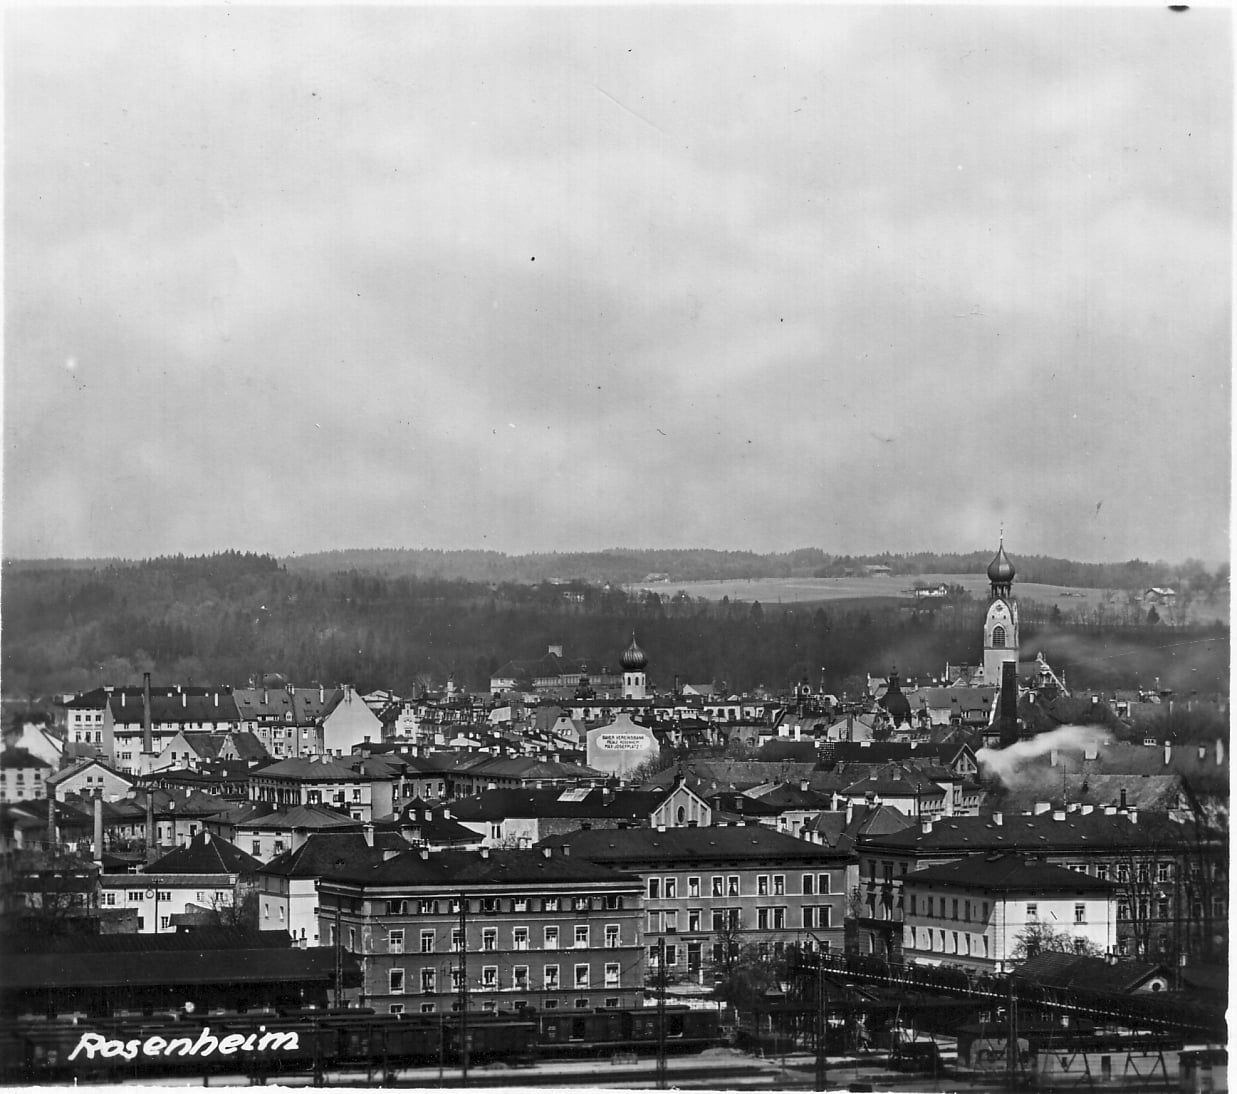 Blick über Rosenheim im Jahr 1941